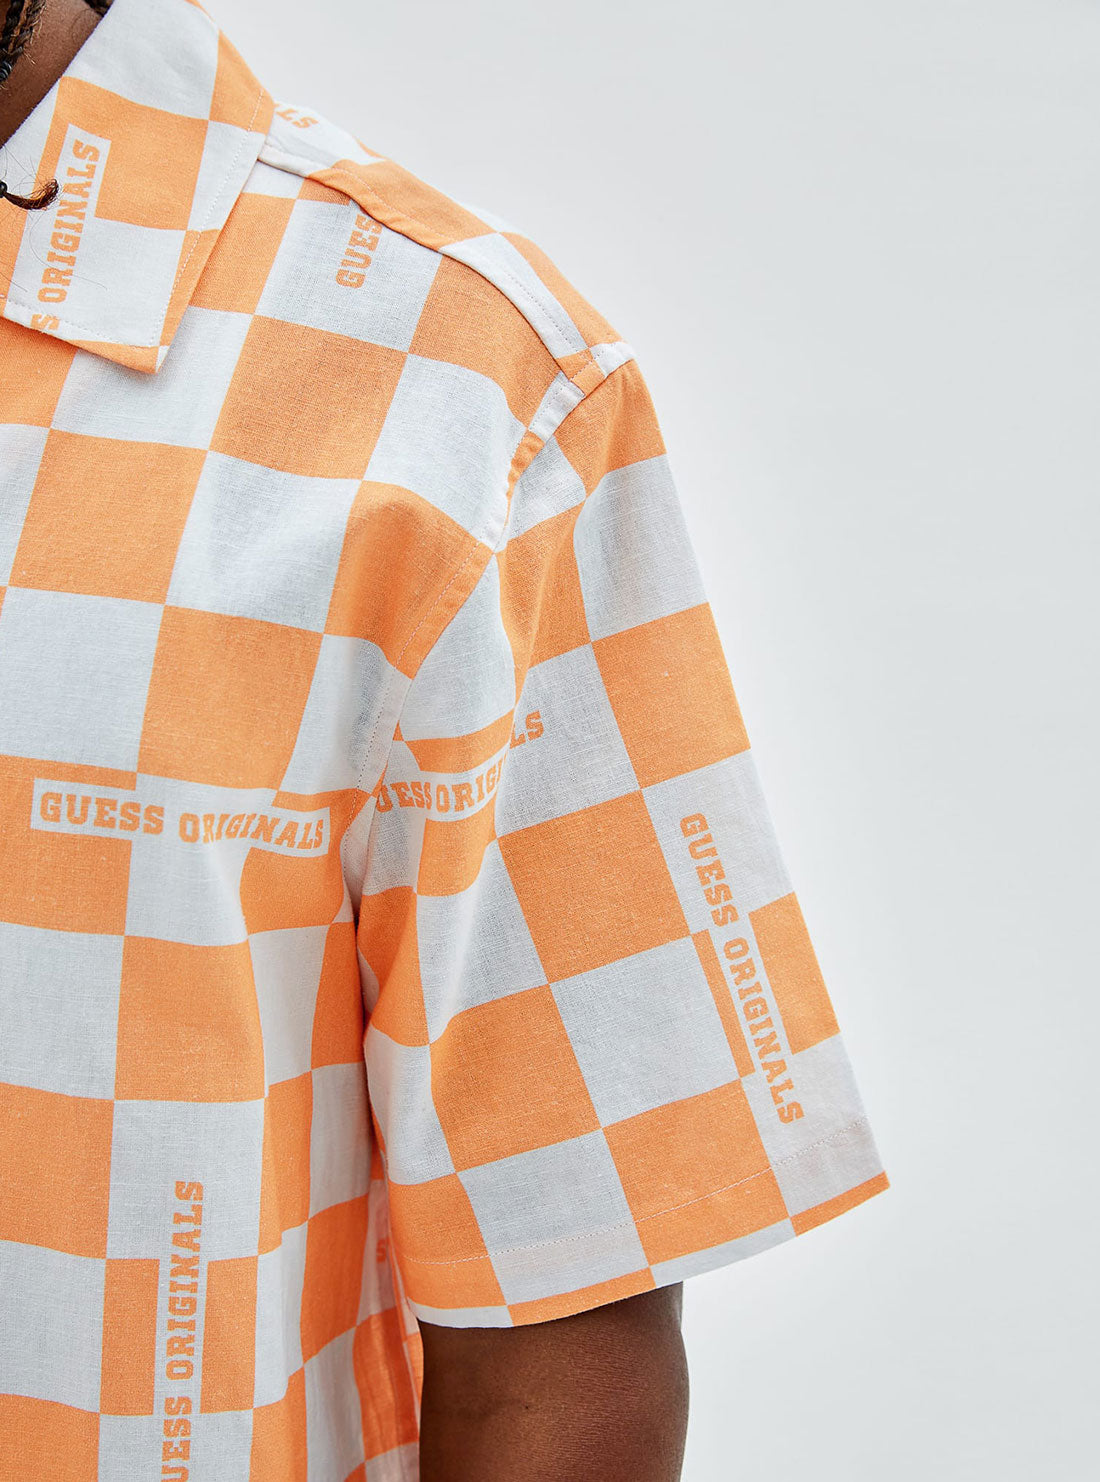 GUESS Men's Guess Originals Orange Checker Shirt M2YH00WEOZ0 Sleeve View